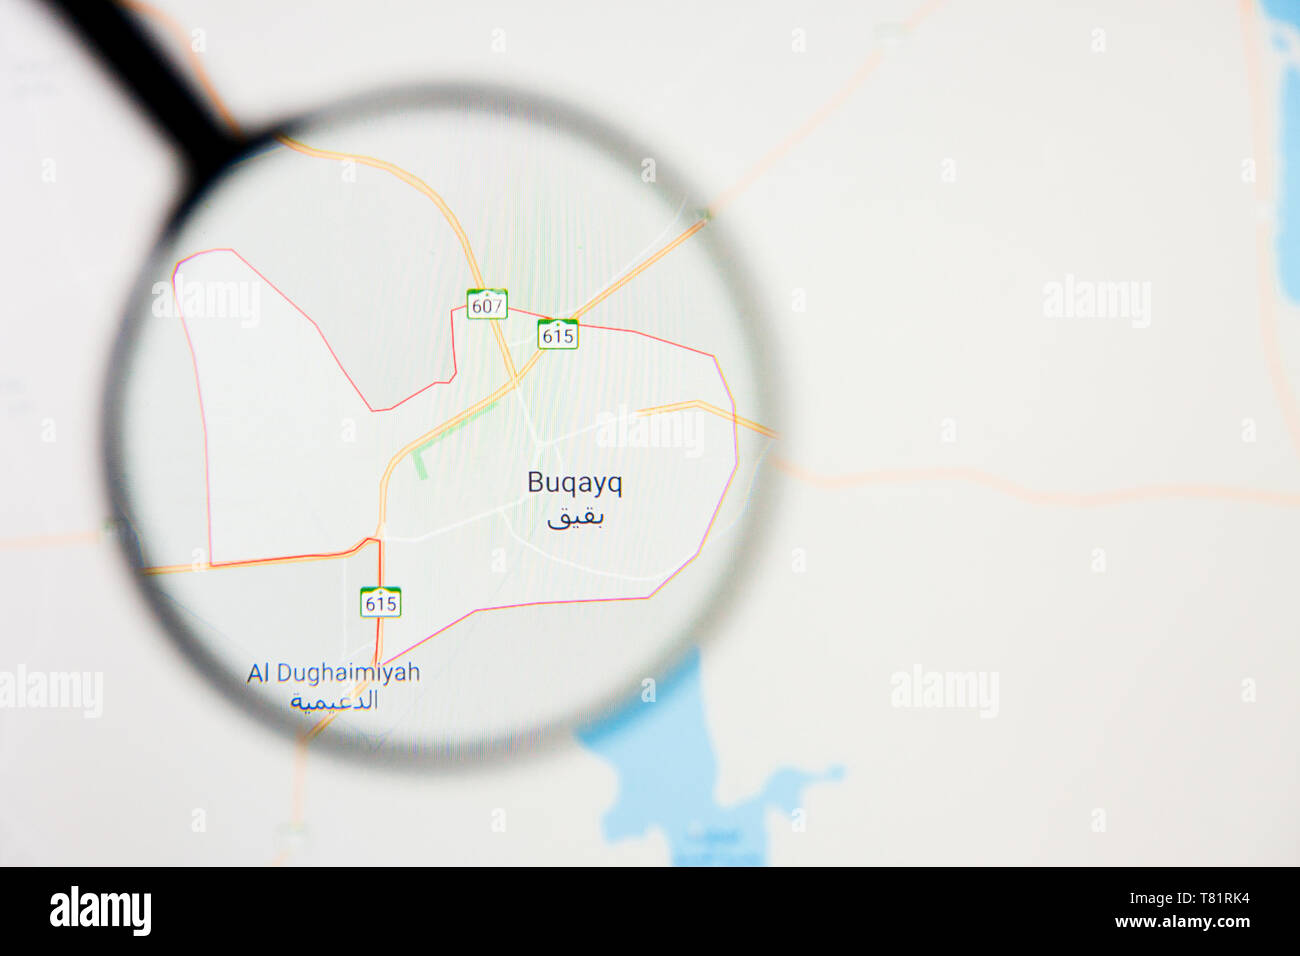 Abqaiq city in Saudi Arabia visualization illustrative concept on screen through magnifying glass Stock Photo